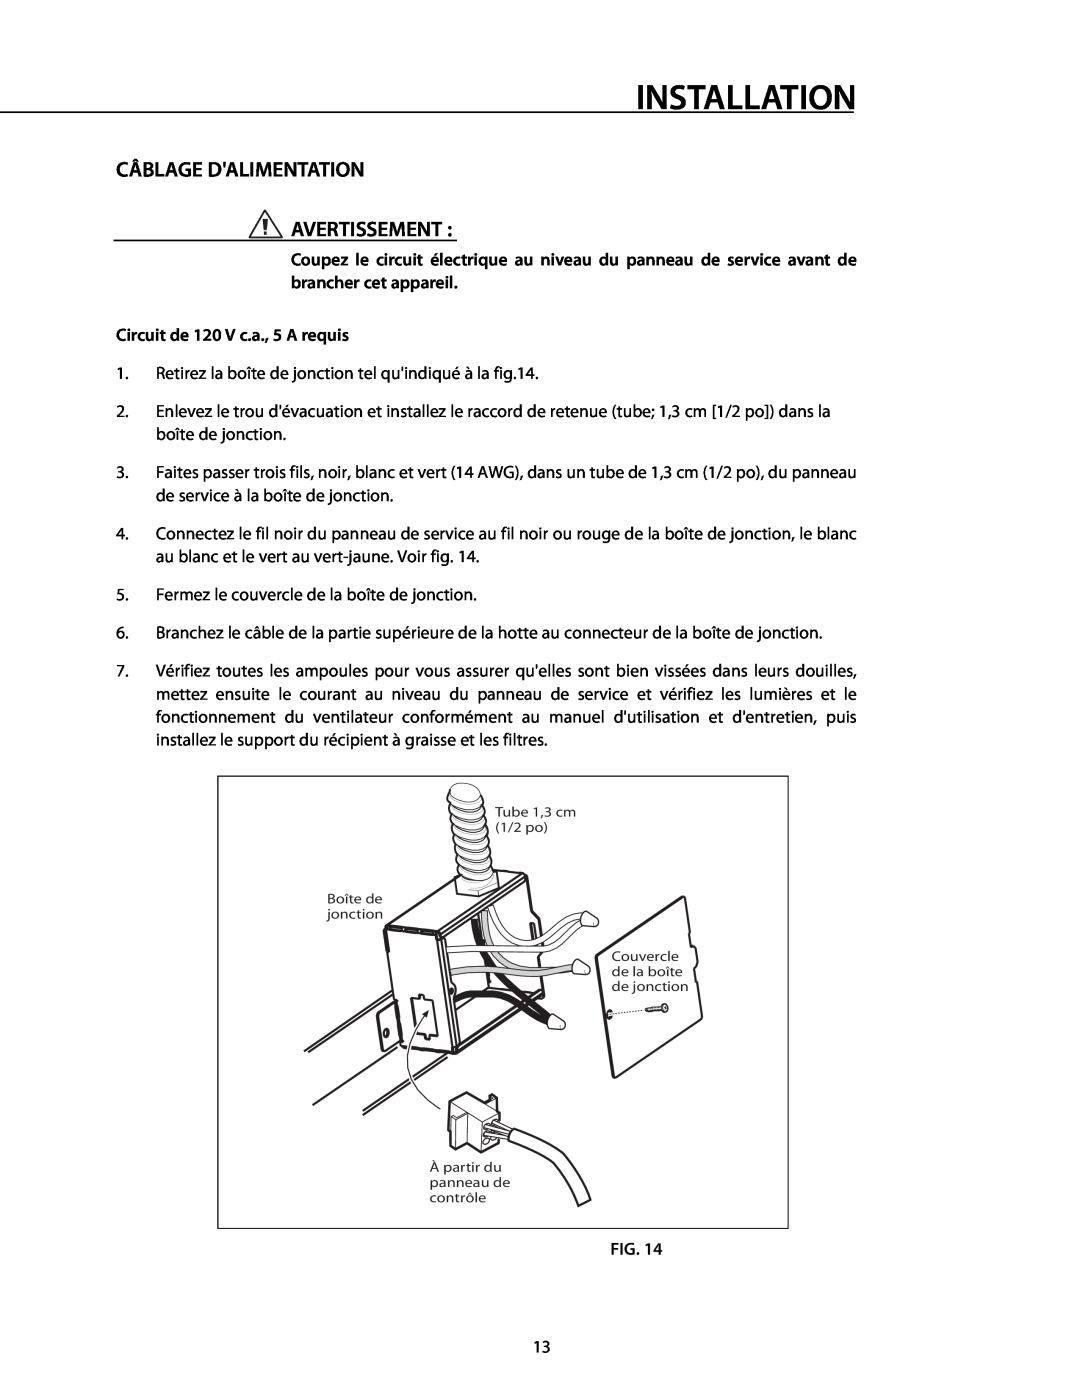 DCS 221712 manual Câblage Dalimentation Avertissement, Installation, Circuit de 120 V c.a., 5 A requis 